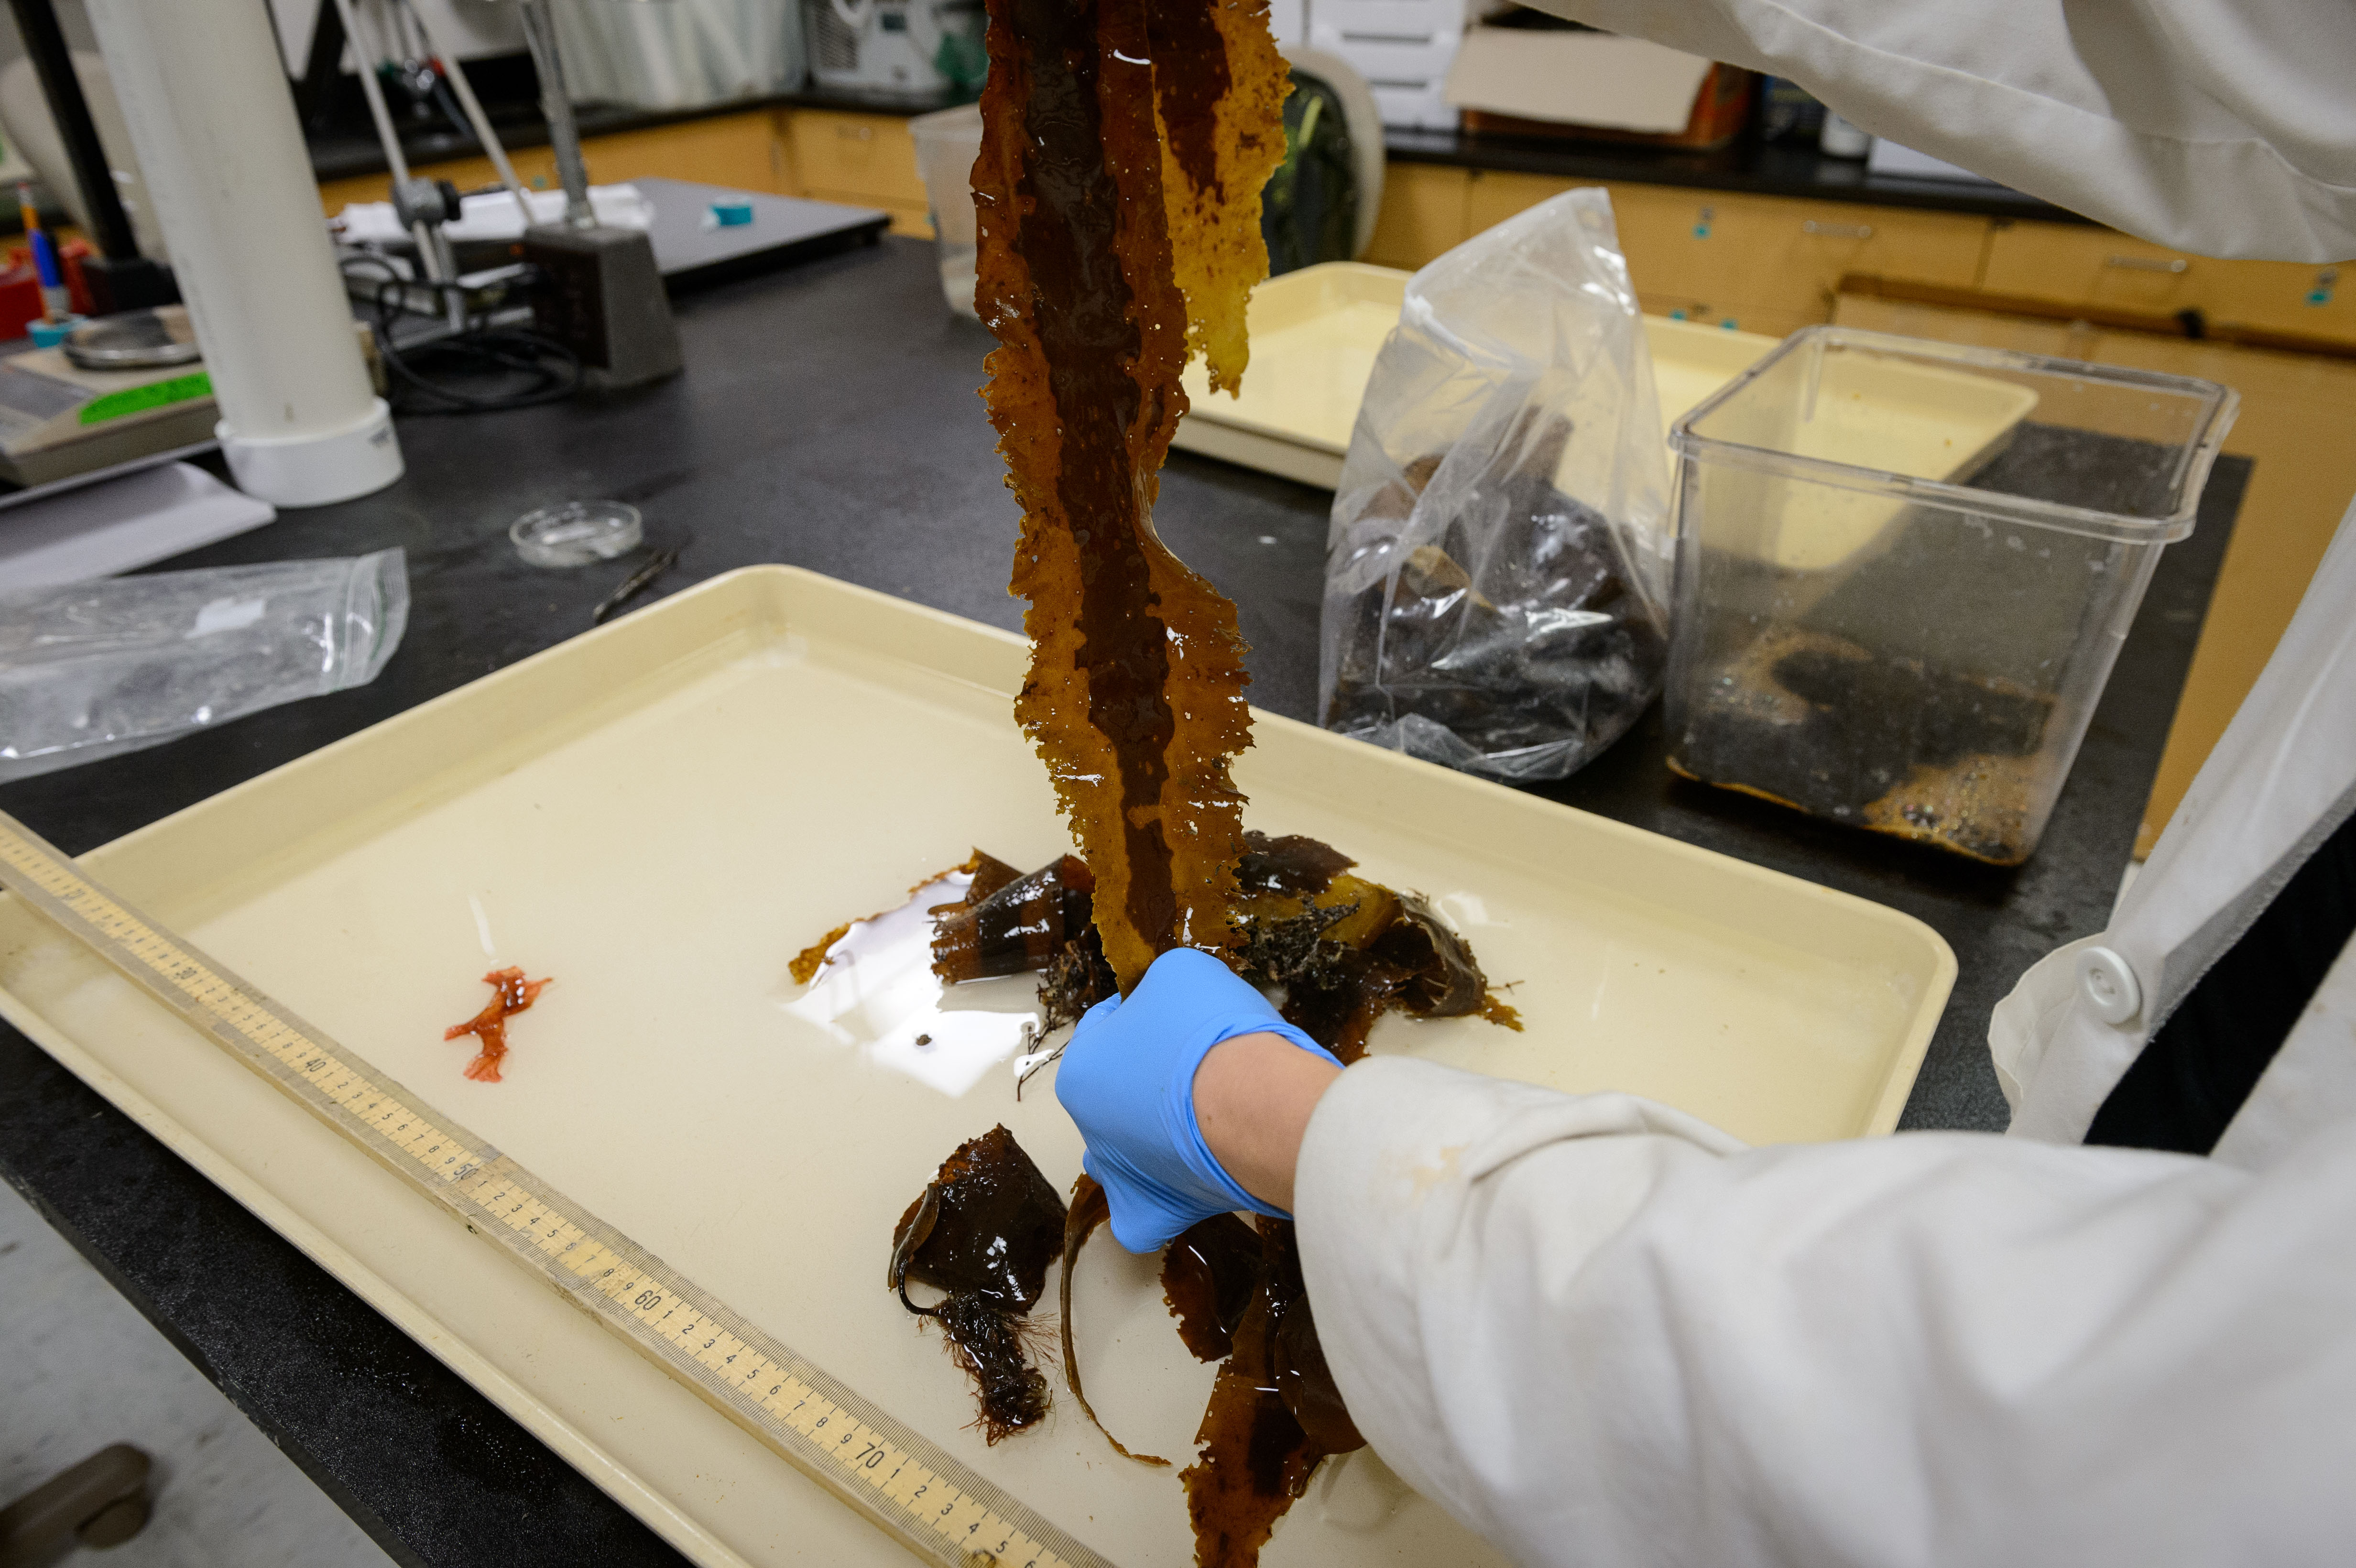 Students measure sugar kelp at the Yarish lab at the Stamford campus on Oct. 19, 2016. (Peter Morenus/UConn Photo)